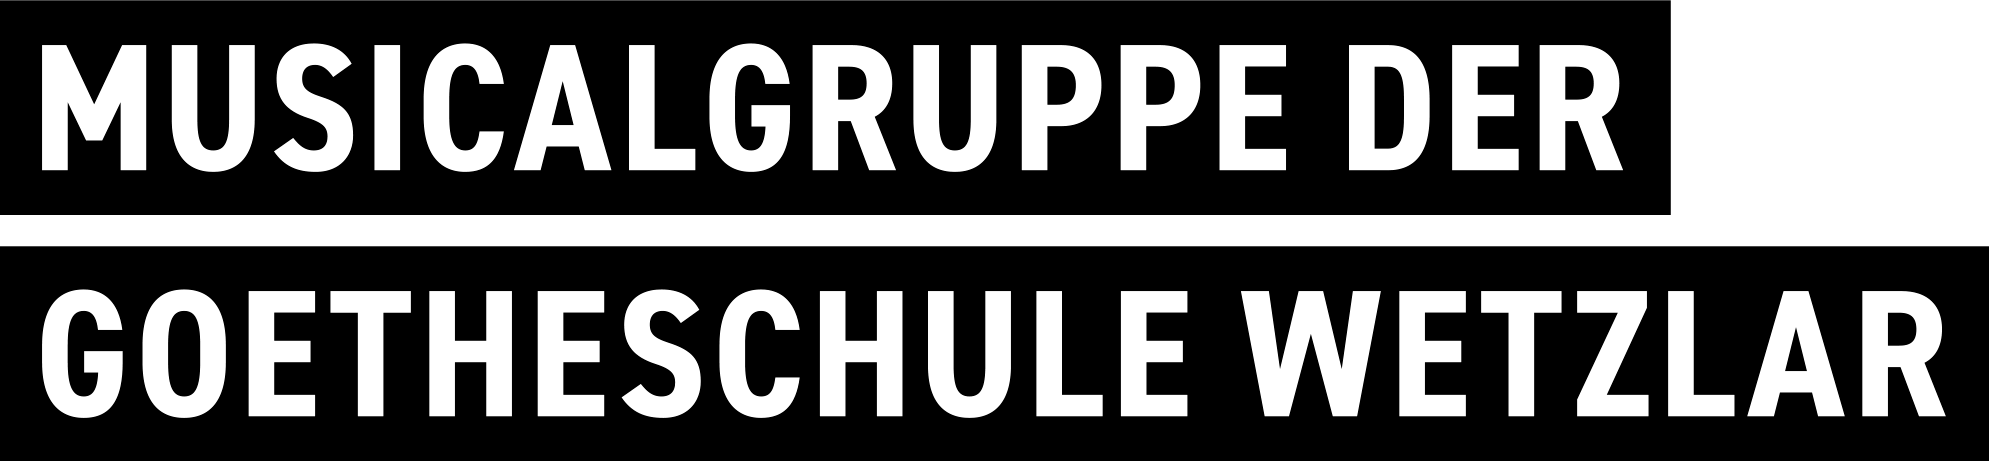 Musicalgruppe der Goetheschule Wetzlar